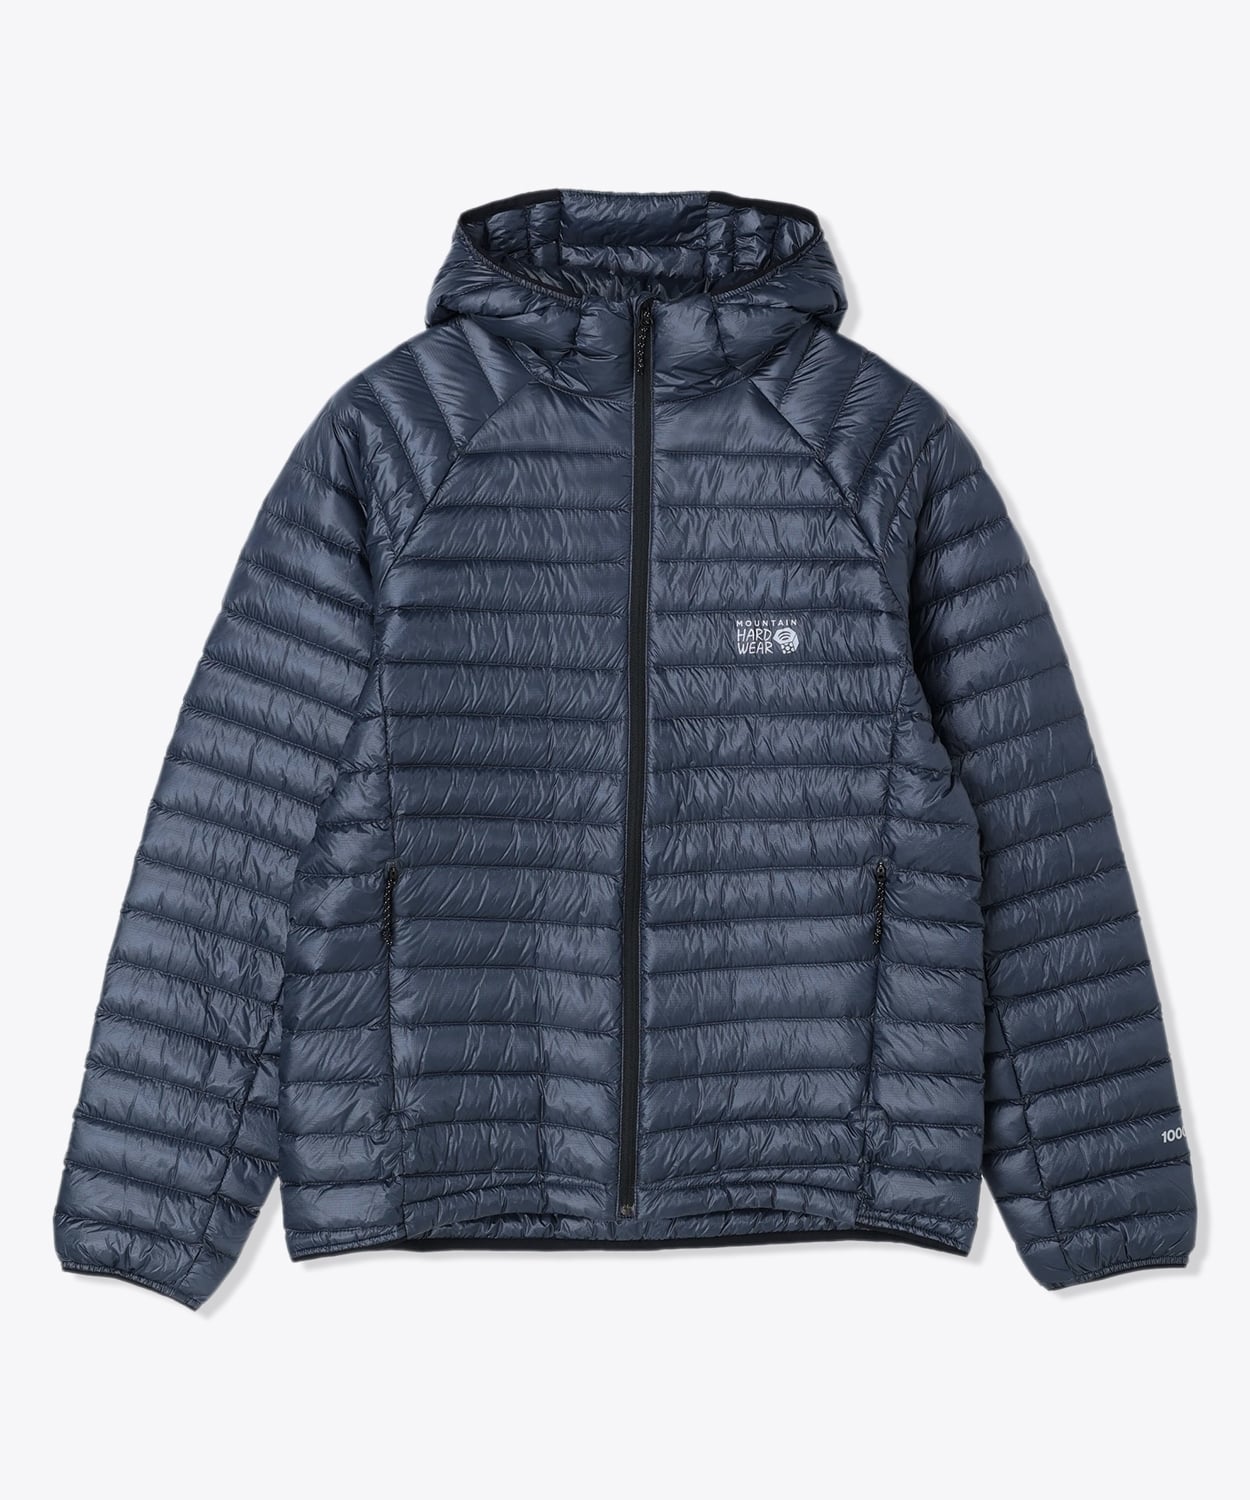 Zara light jacket discount 56% KIDS FASHION Jackets Elegant Blue 11Y 